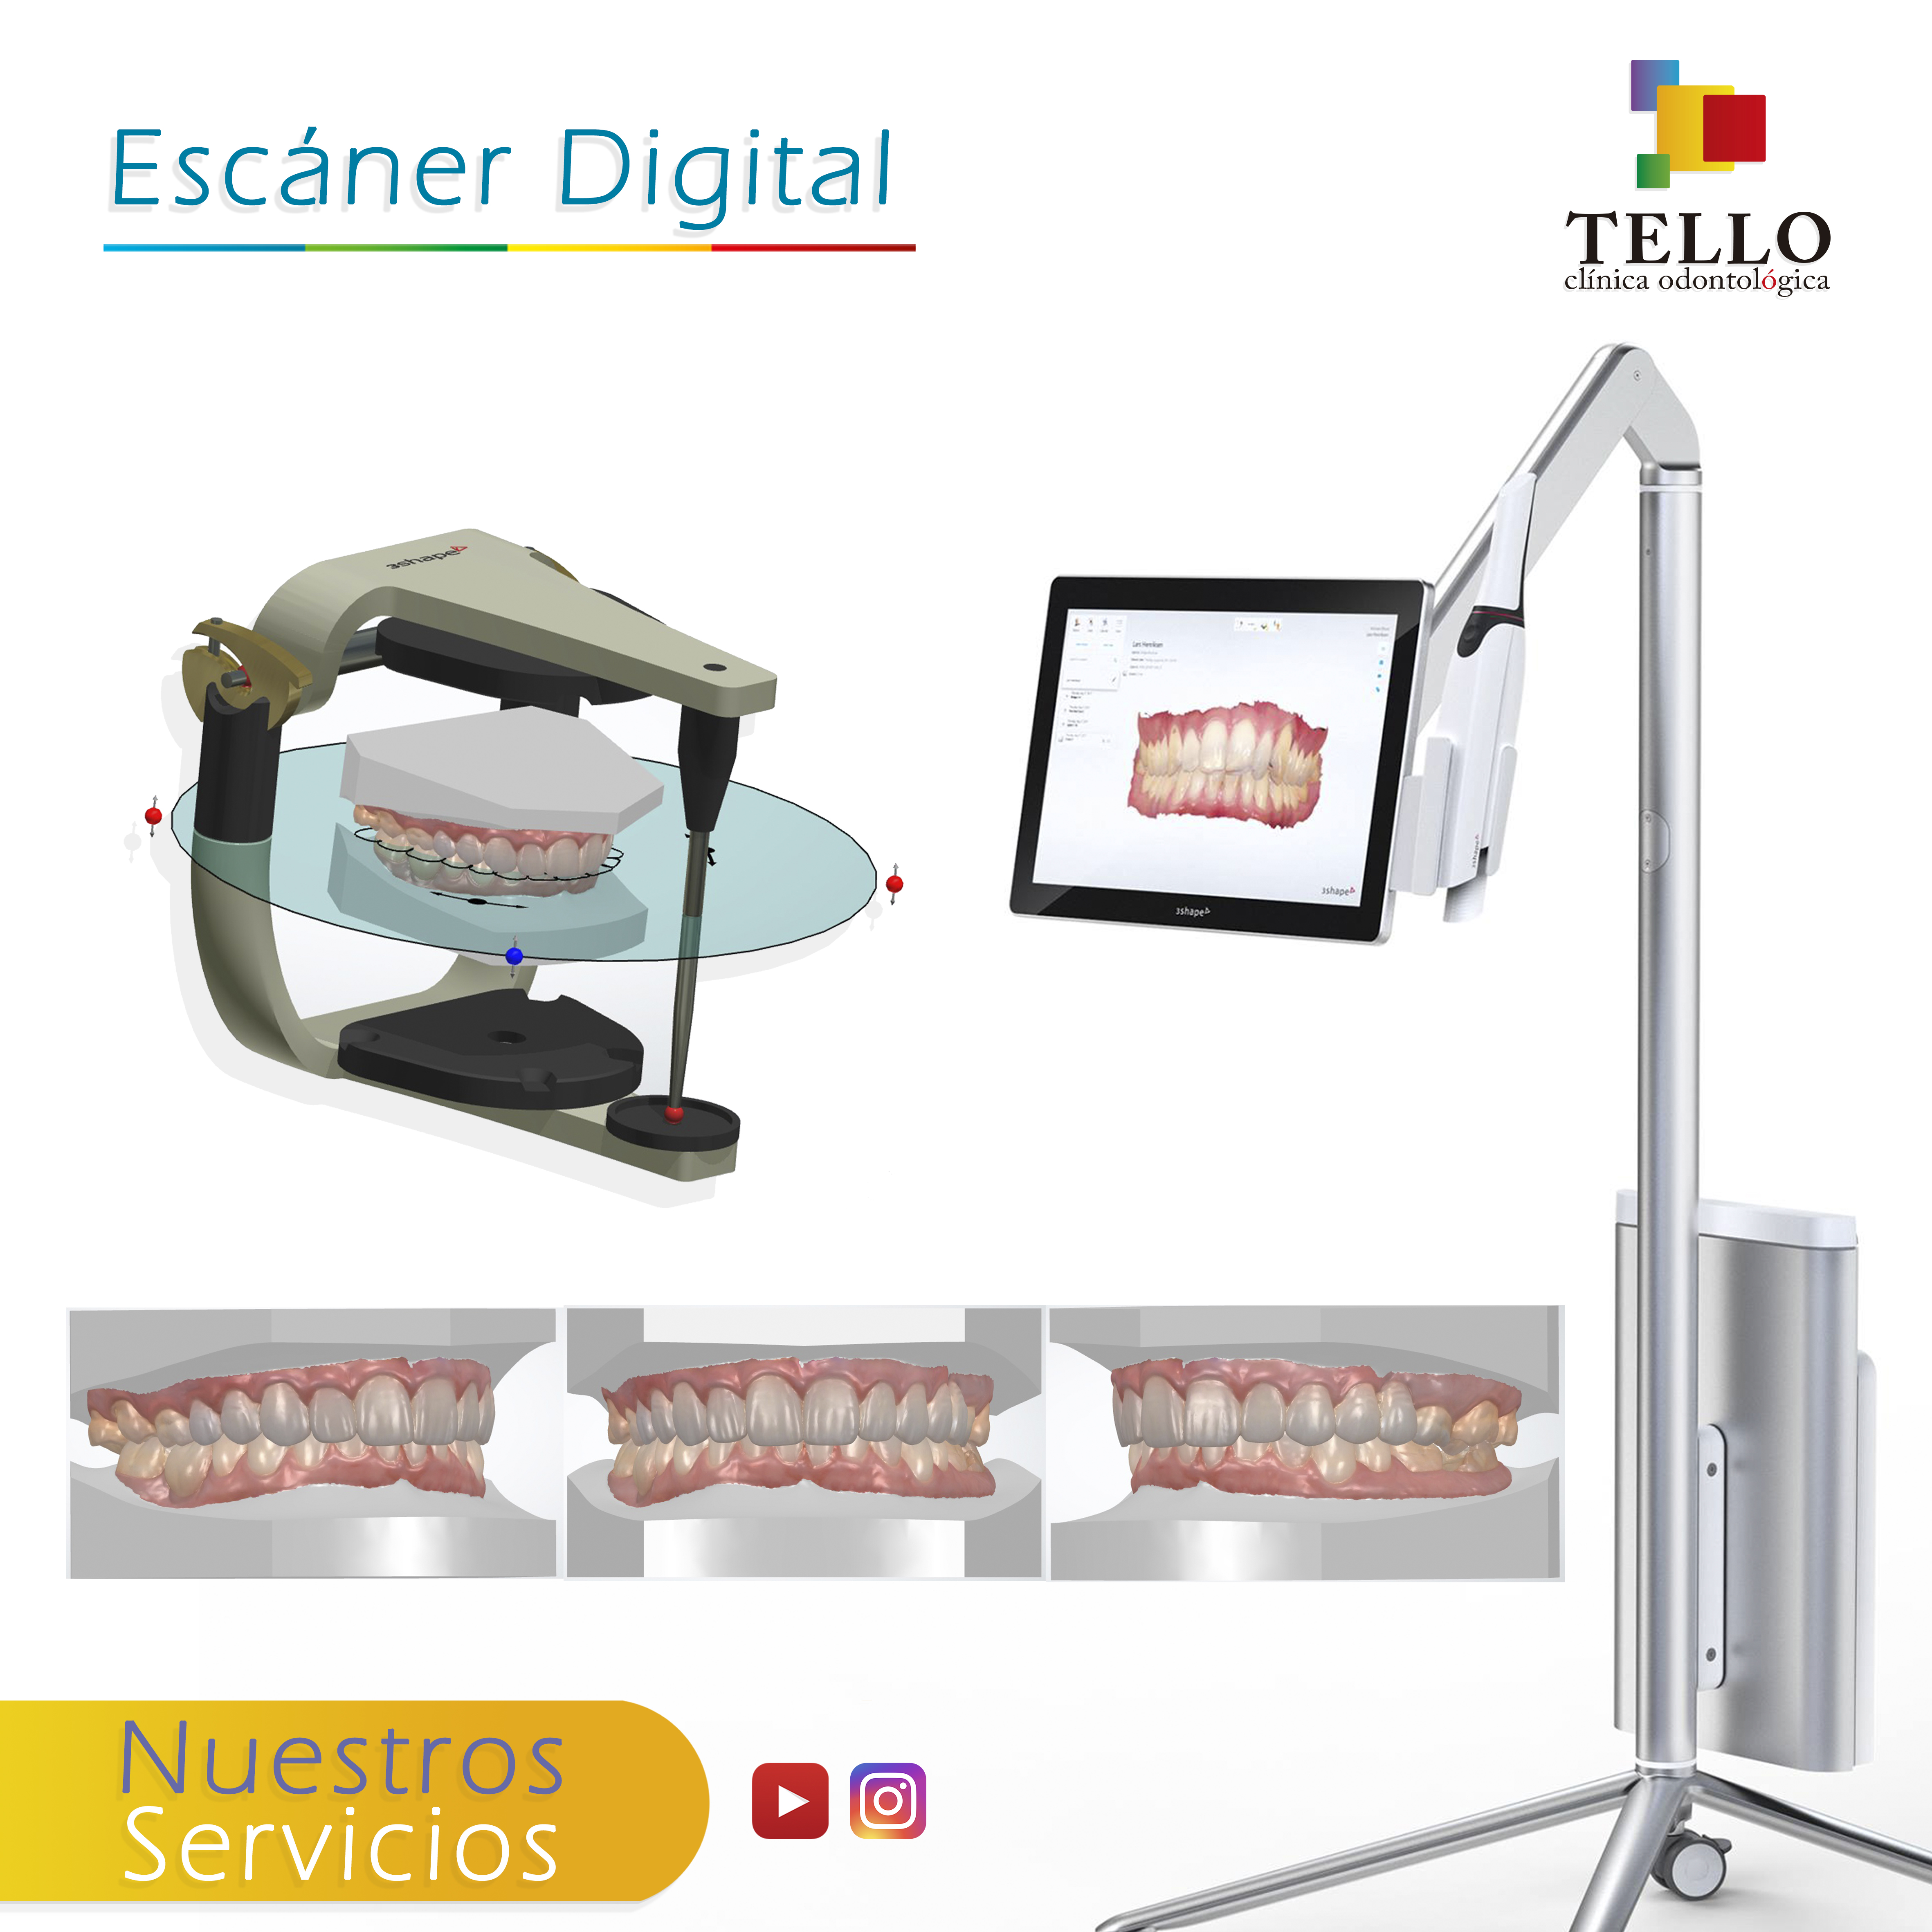 Escaneo digital Tello Odontología